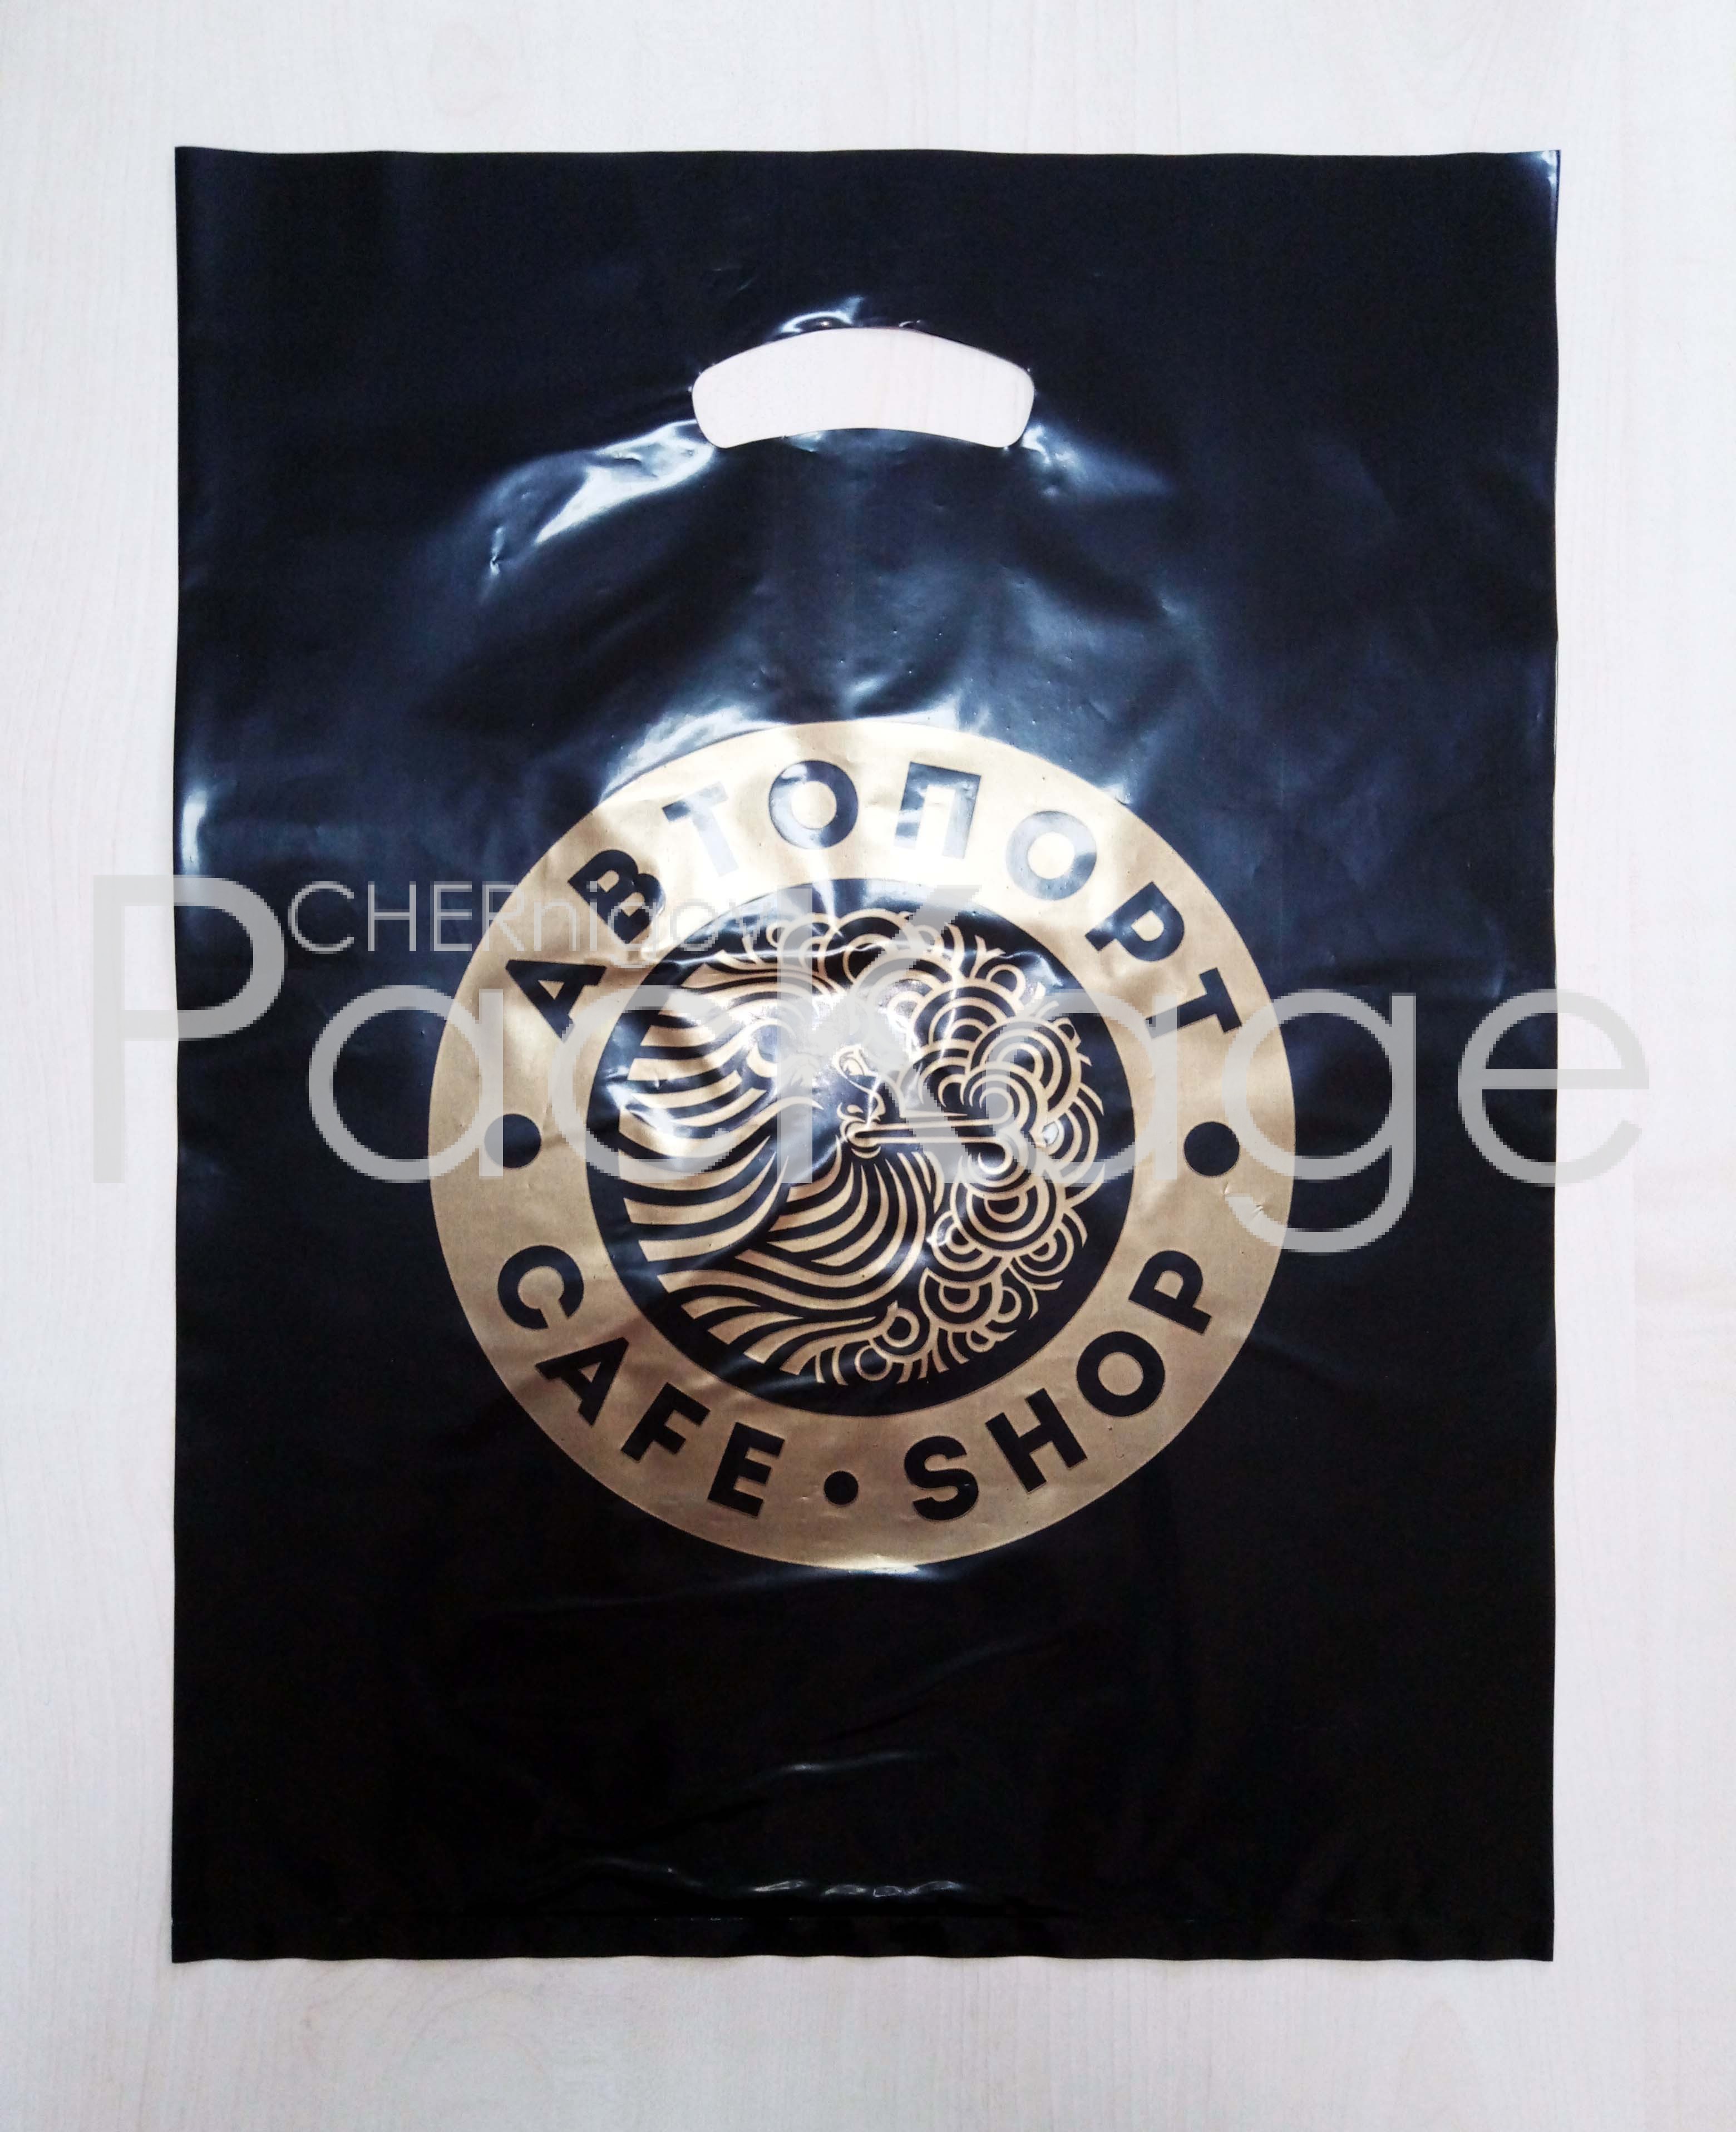 Большие пакеты и мешки Chernigov Package - Фото P70310-104629